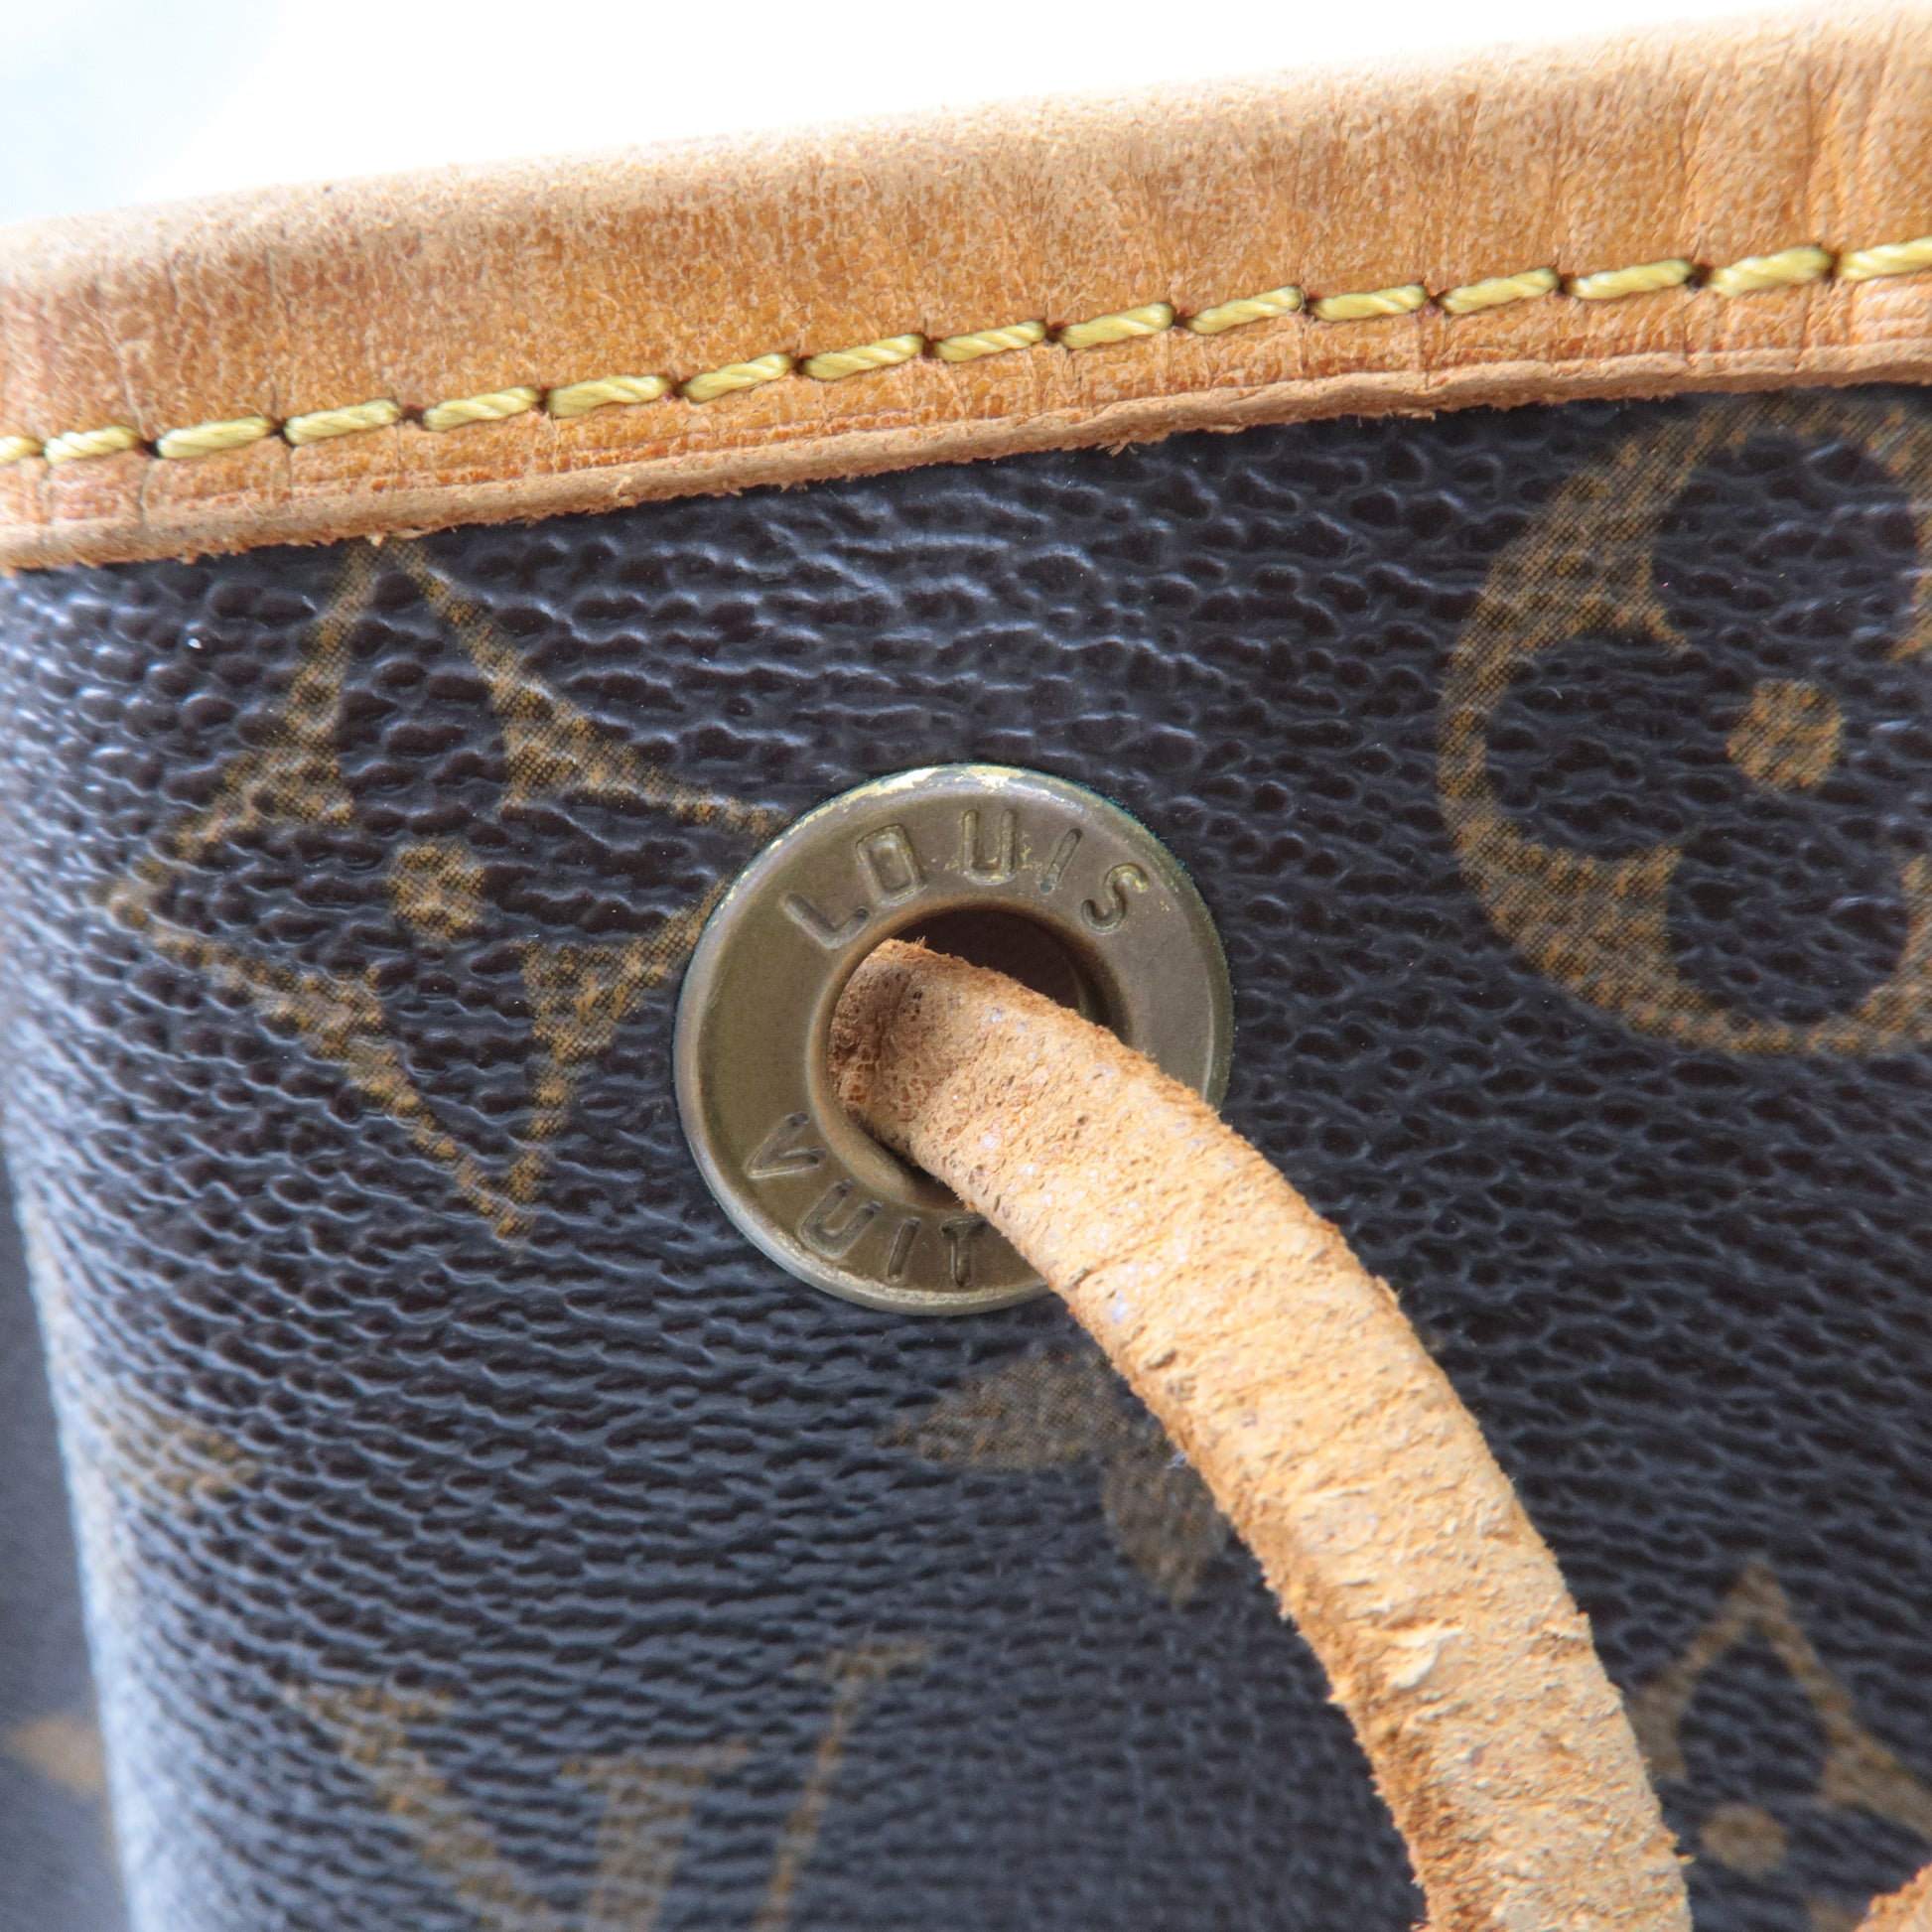 Authentic Louis Vuitton Monogram Mini Noe Hand Bag M42227 Brown Used F/S